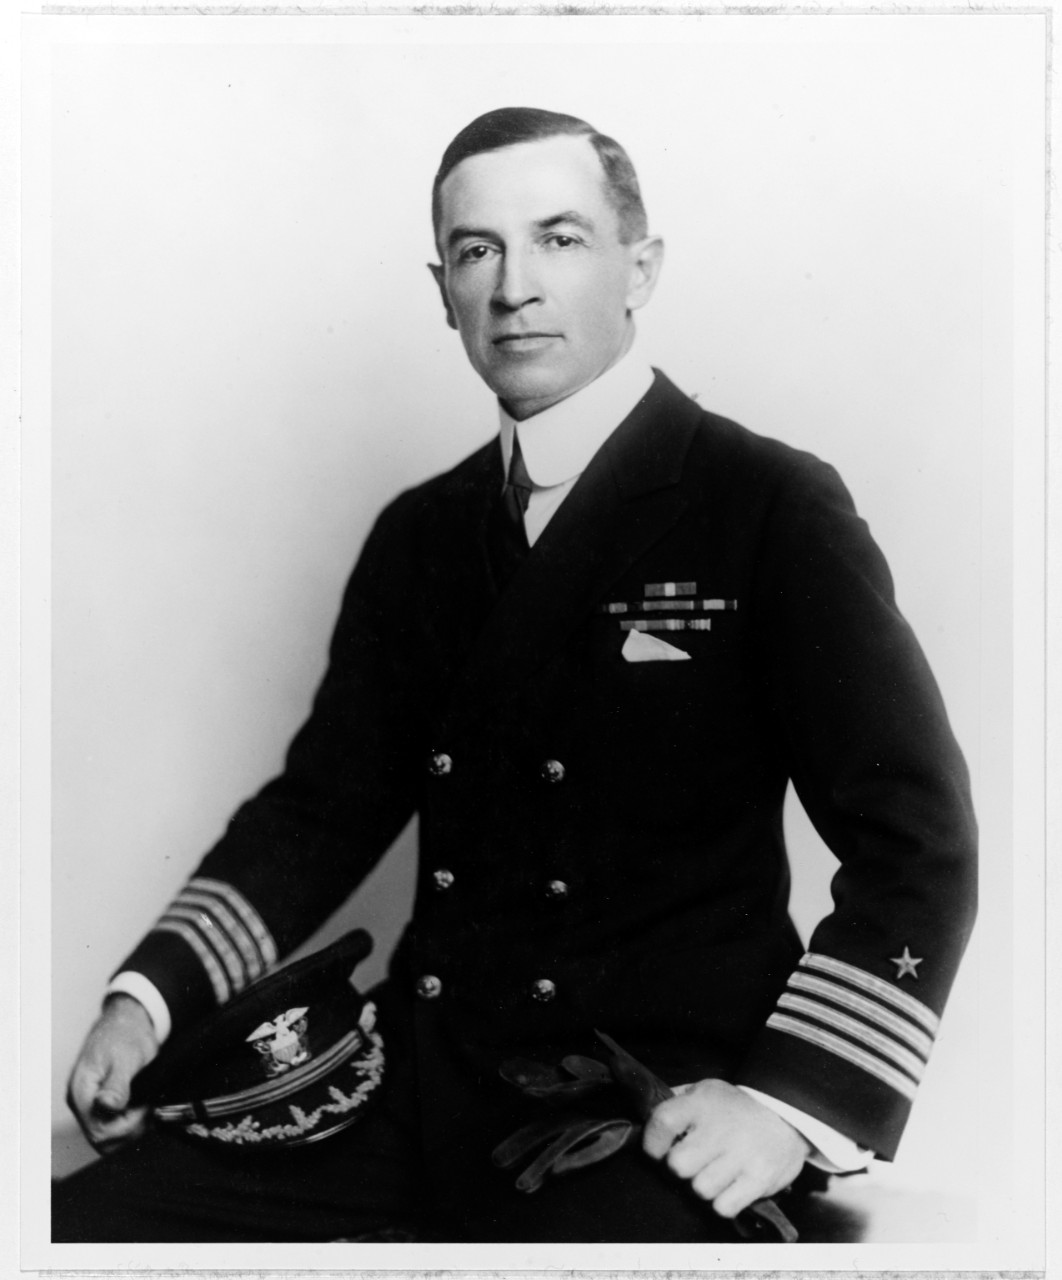 Captain Austin Kautz, USN